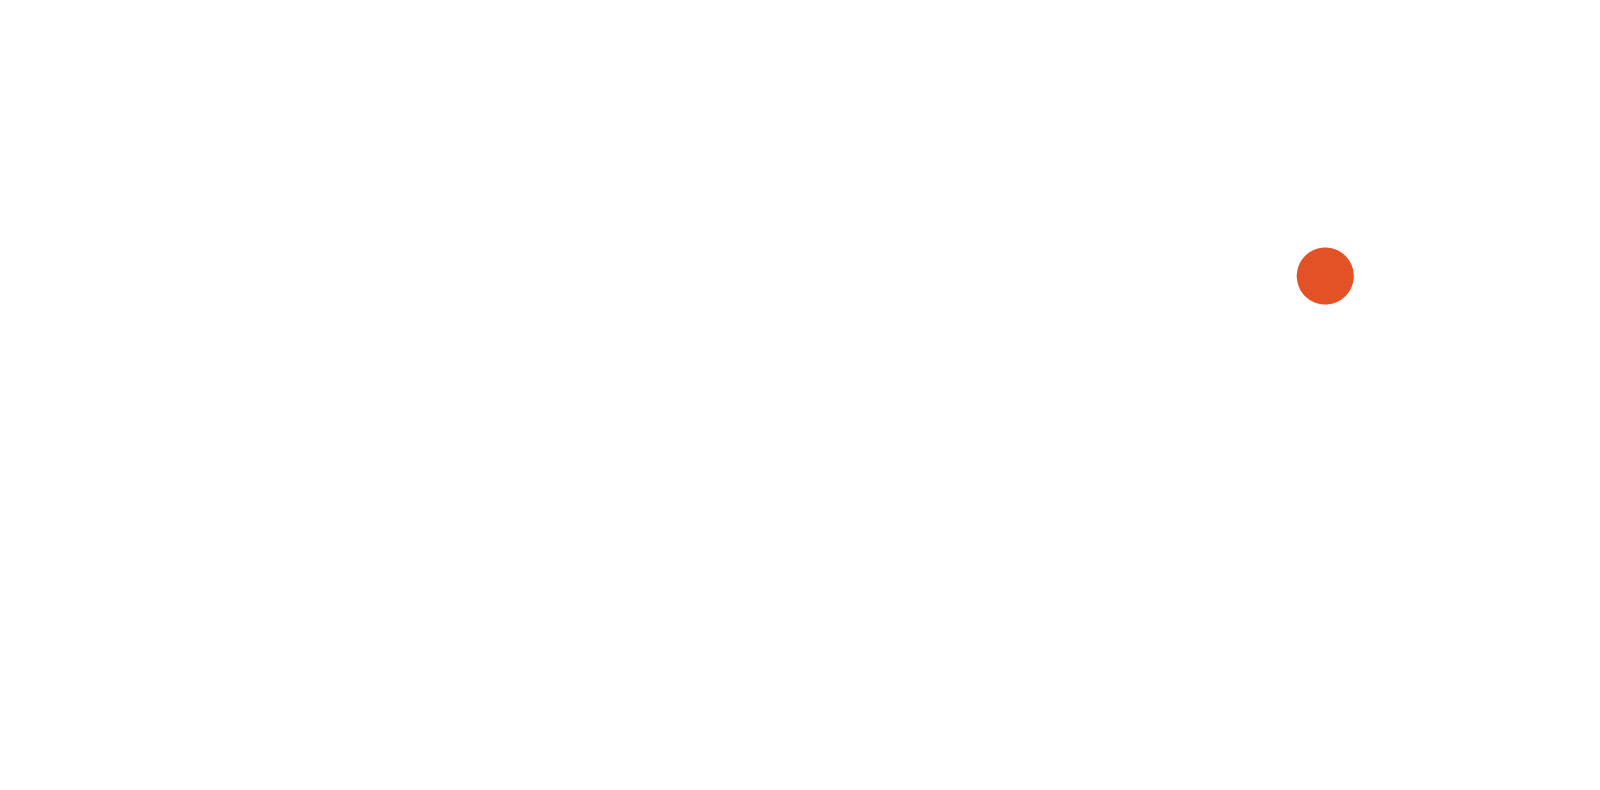 Sony Scene type logo with orange dot